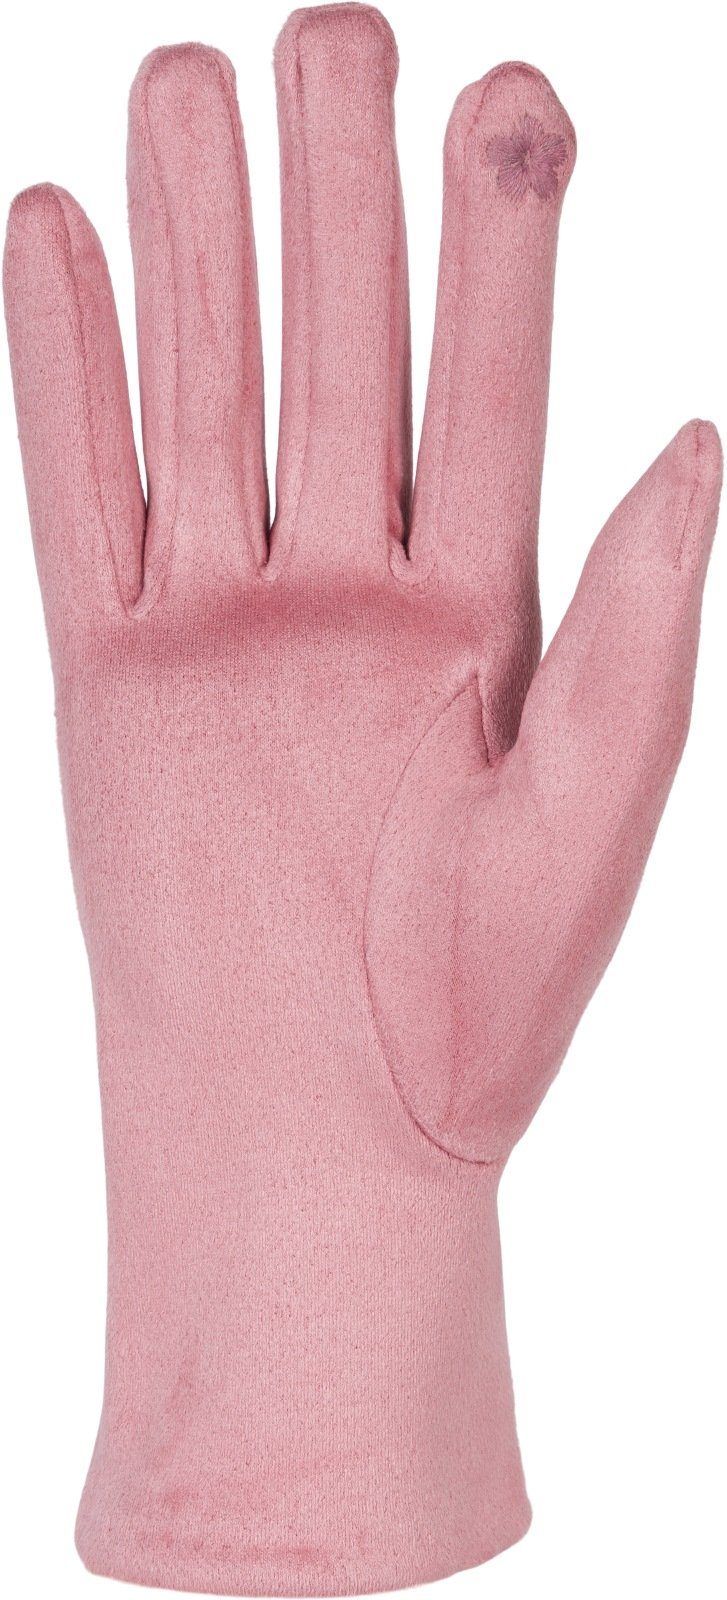 styleBREAKER Fleecehandschuhe Einfarbige Handschuhe Altrose Touchscreen Ziernähte